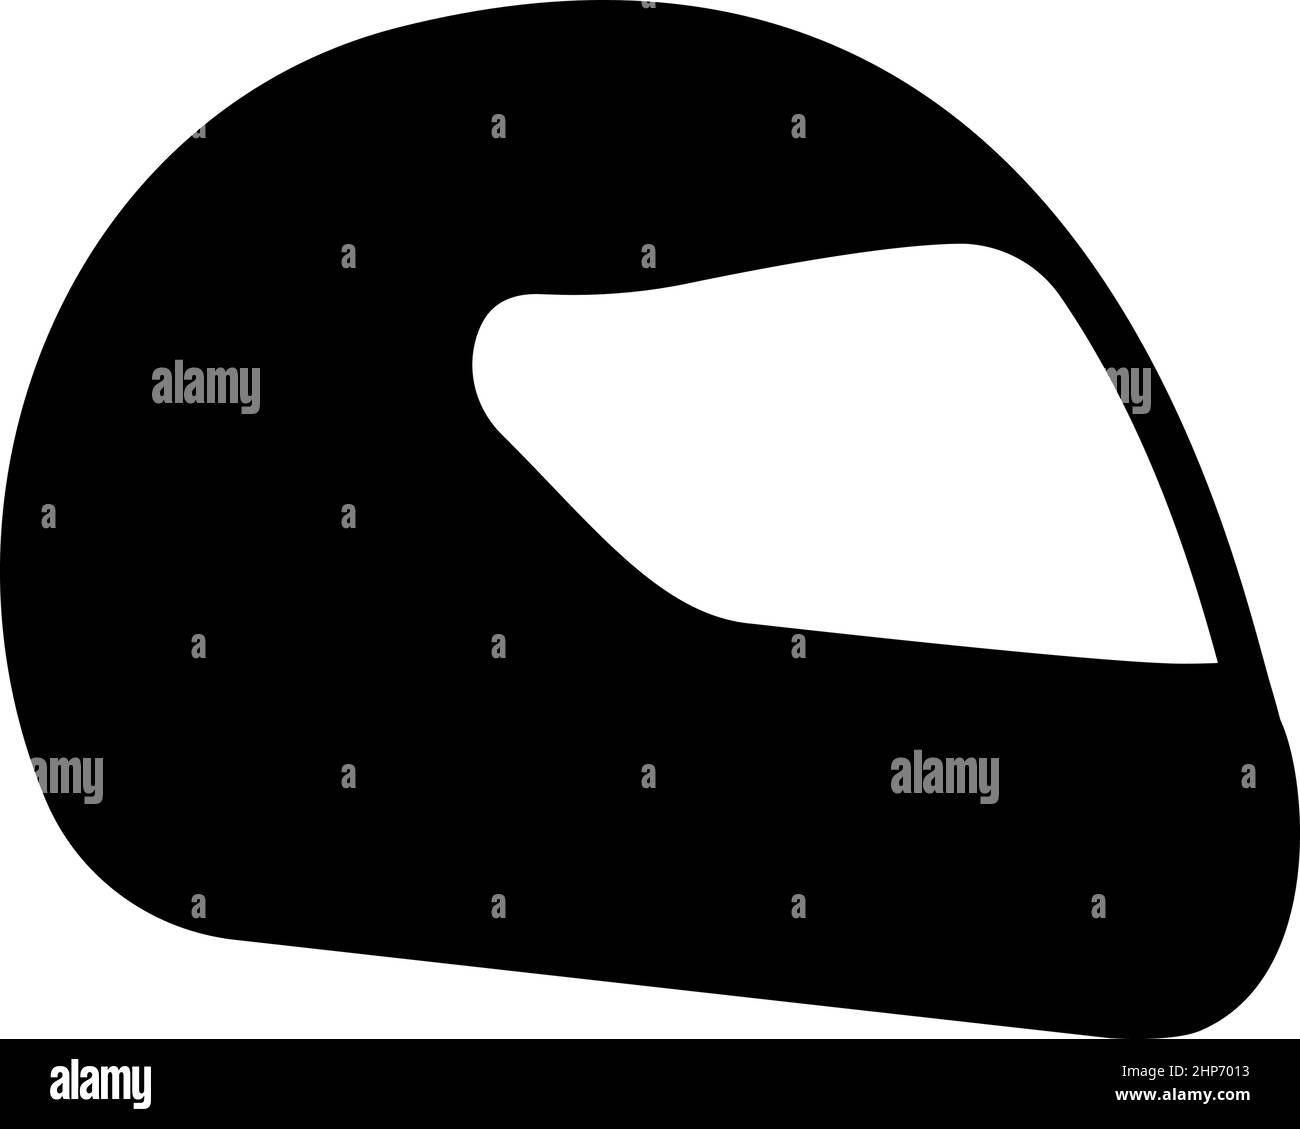 Helm Motocycle Racing Sport Symbol schwarz Farbe Vektor Illustration flachen Stil Bild Stock Vektor